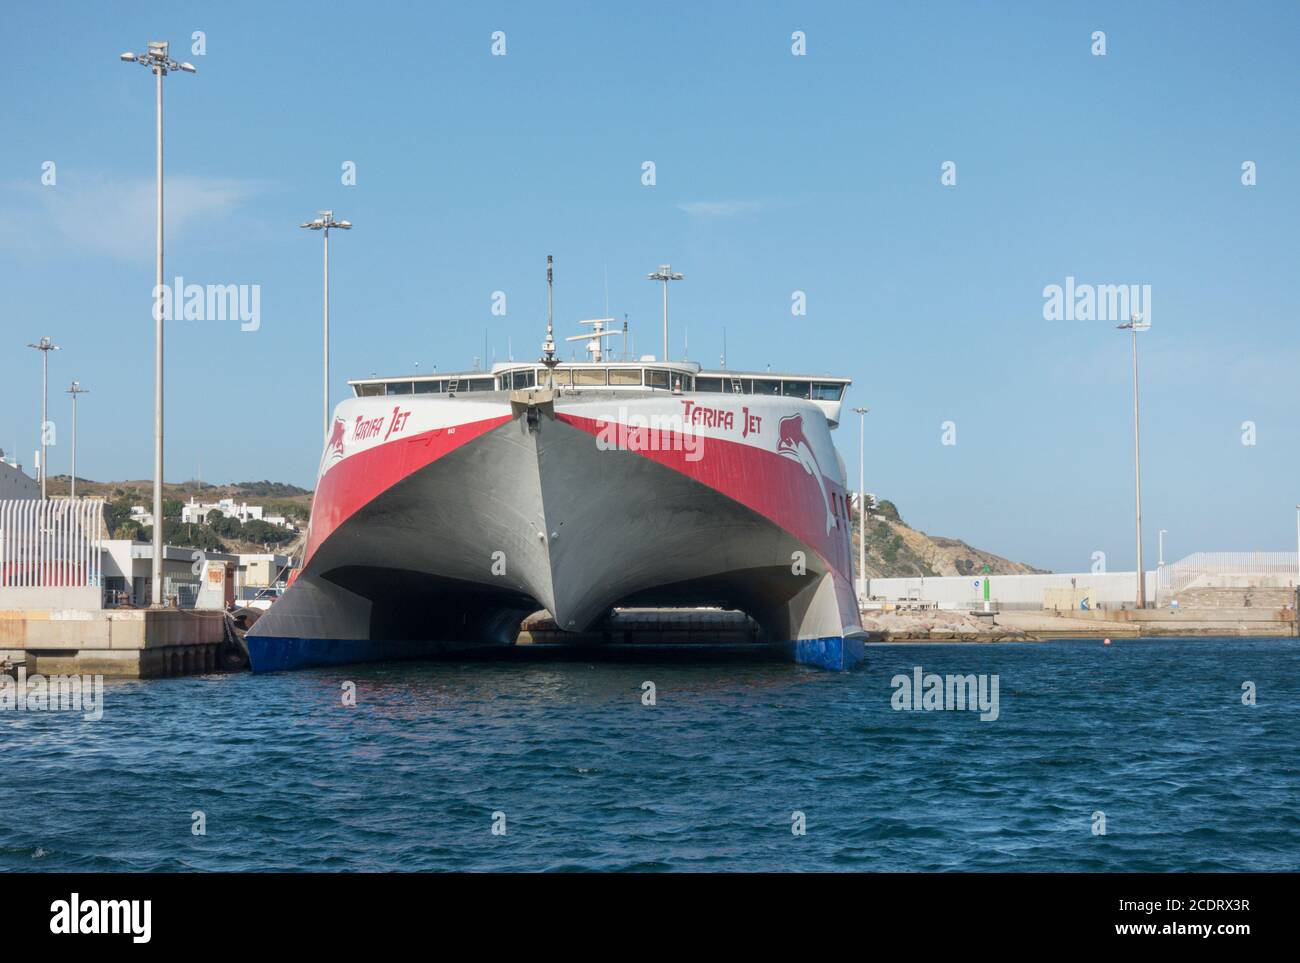 Tarifa Spain. Tarifa Jet, fast catamaran ferry, in Port of Tarifa, Costa de la luz, Spain. Stock Photo